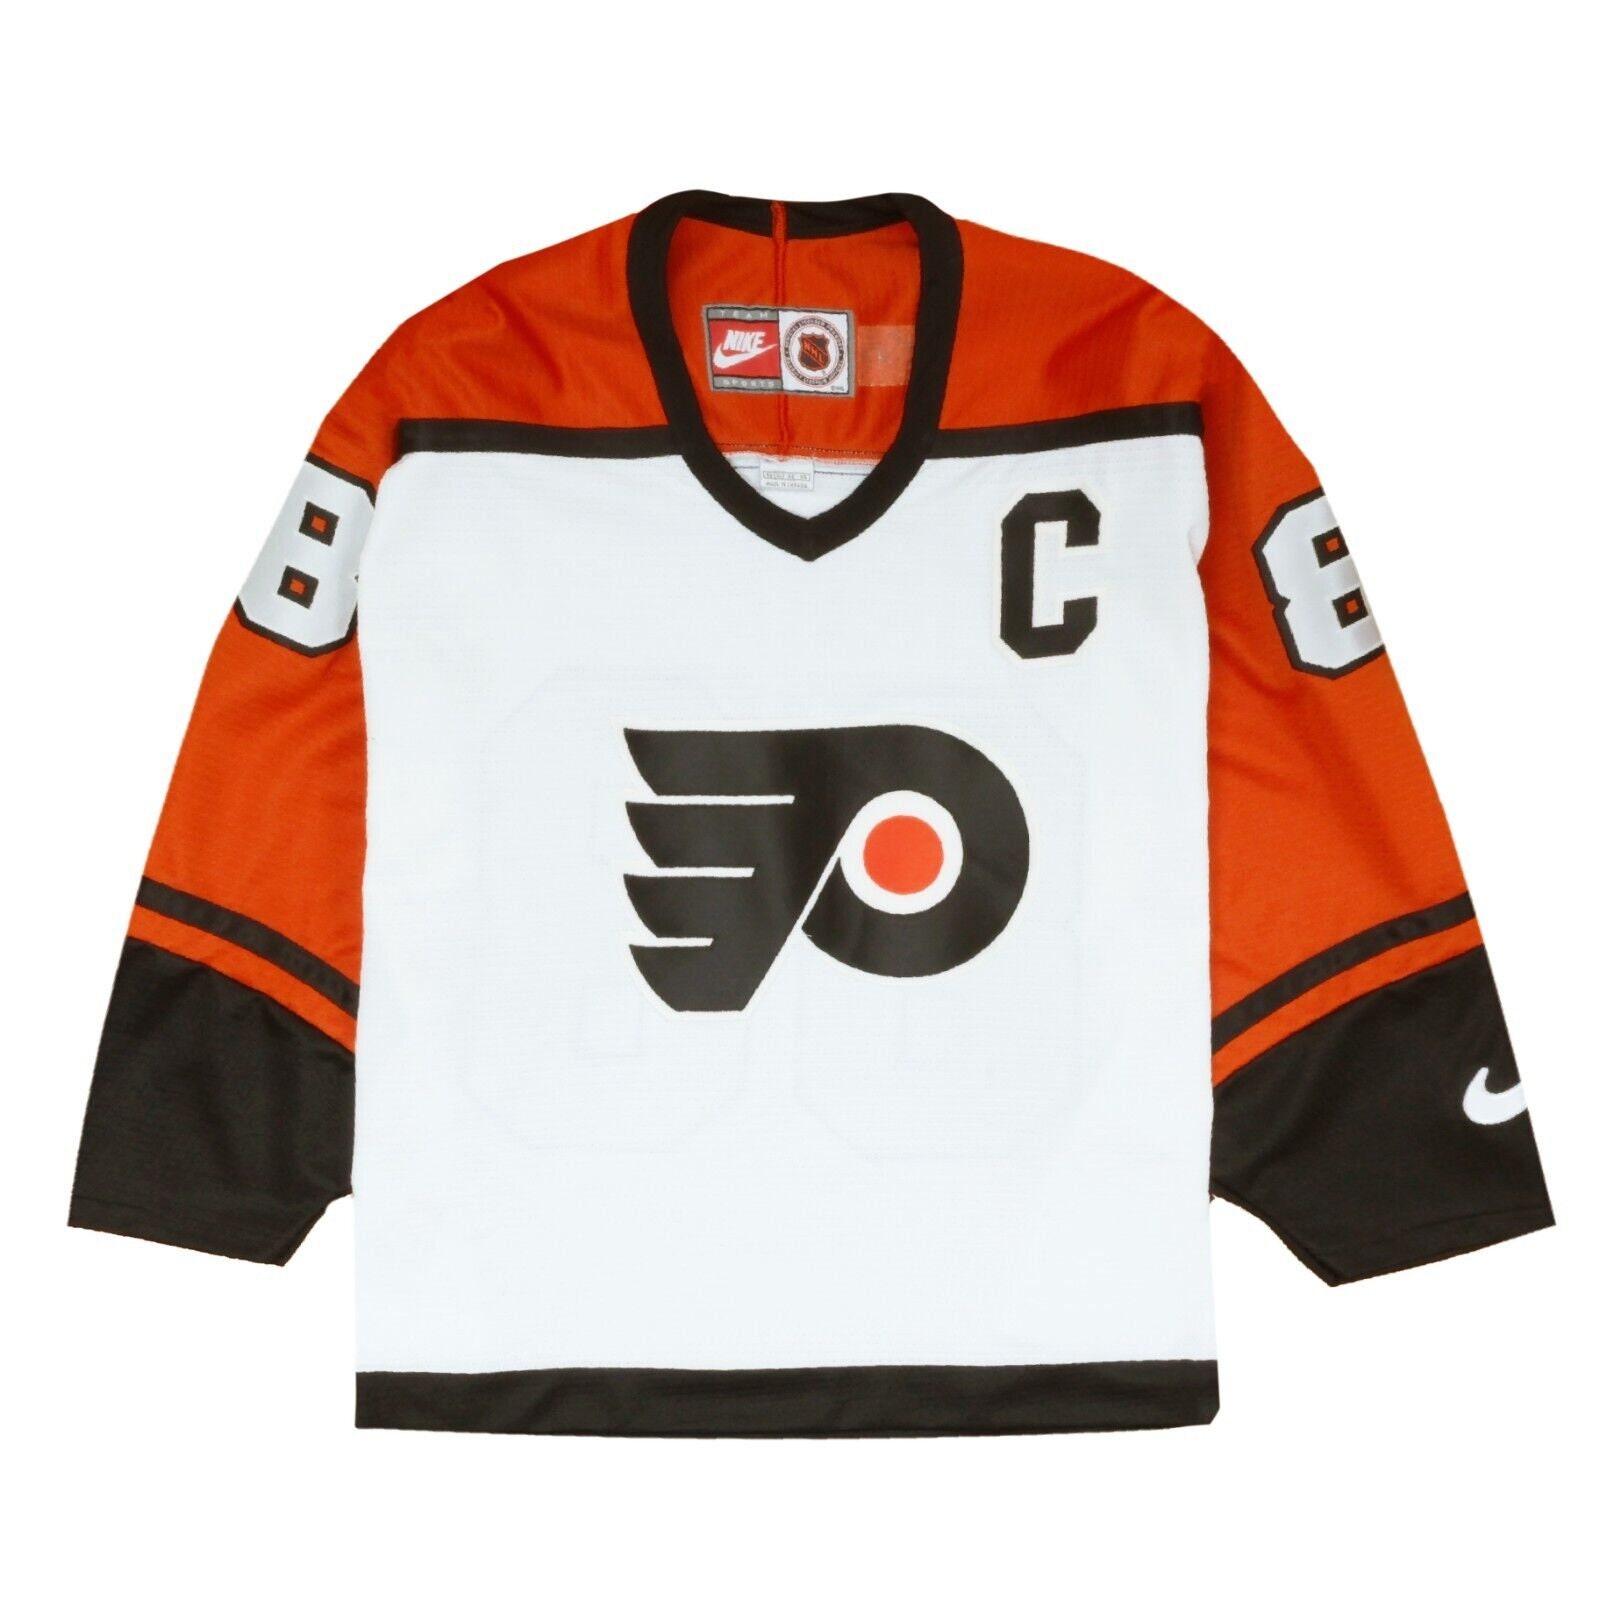 Gritty Philadelphia Flyers Mascot Claude Giroux Jakub Voracek T-Shirt